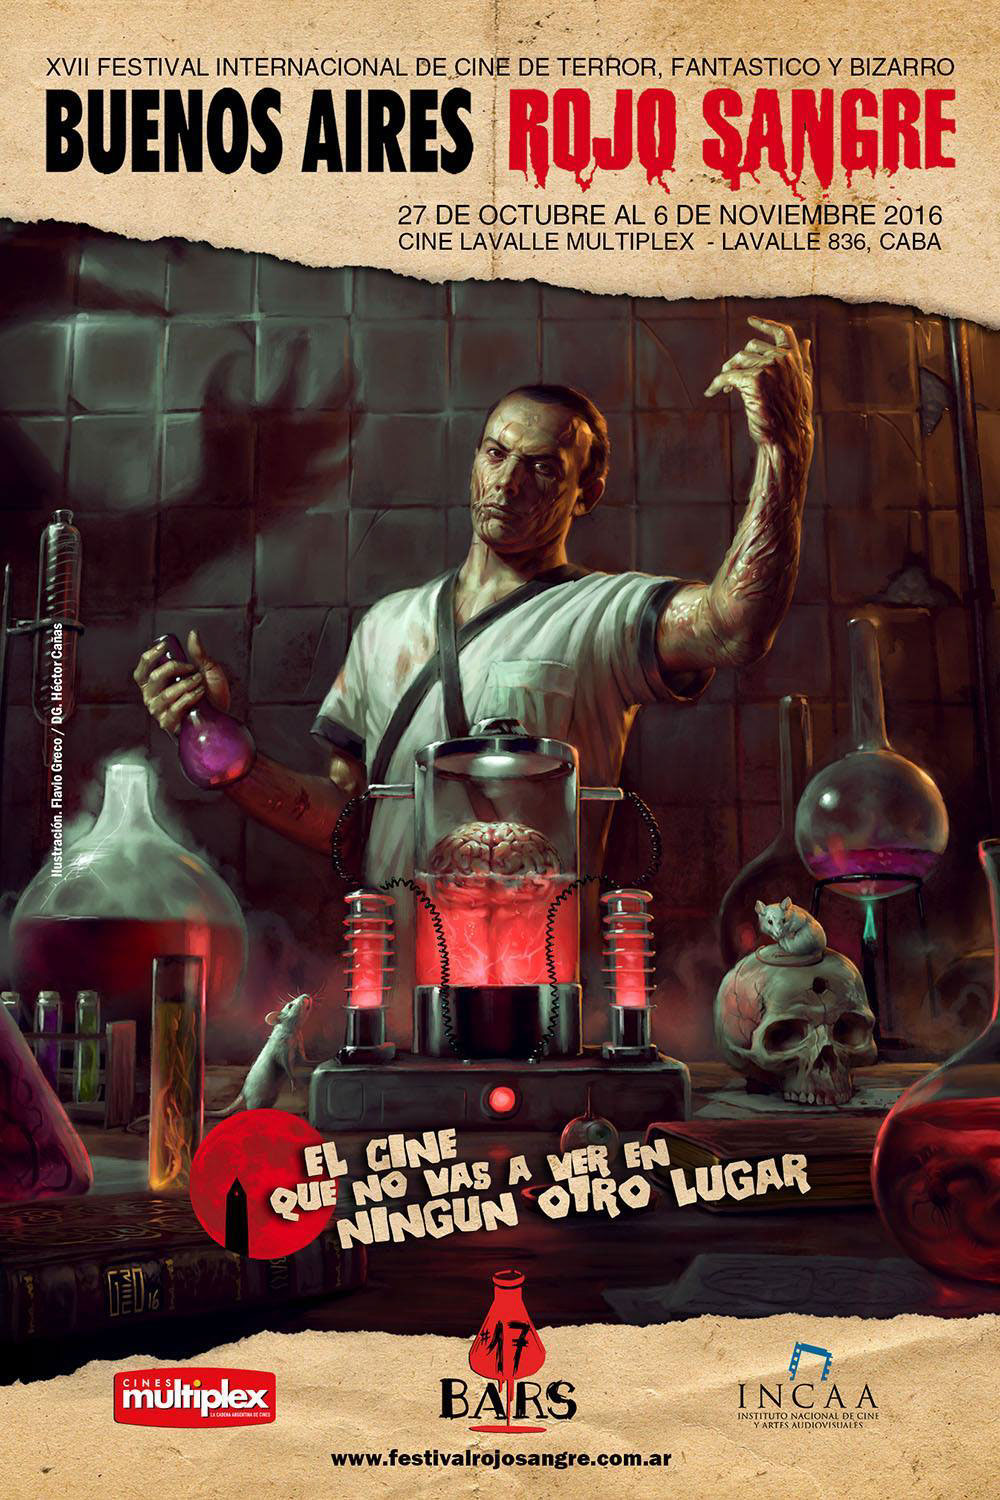 bars film festival poster art Mad Scientist BARS 17 buenos aires rojo sangre laboratory brain